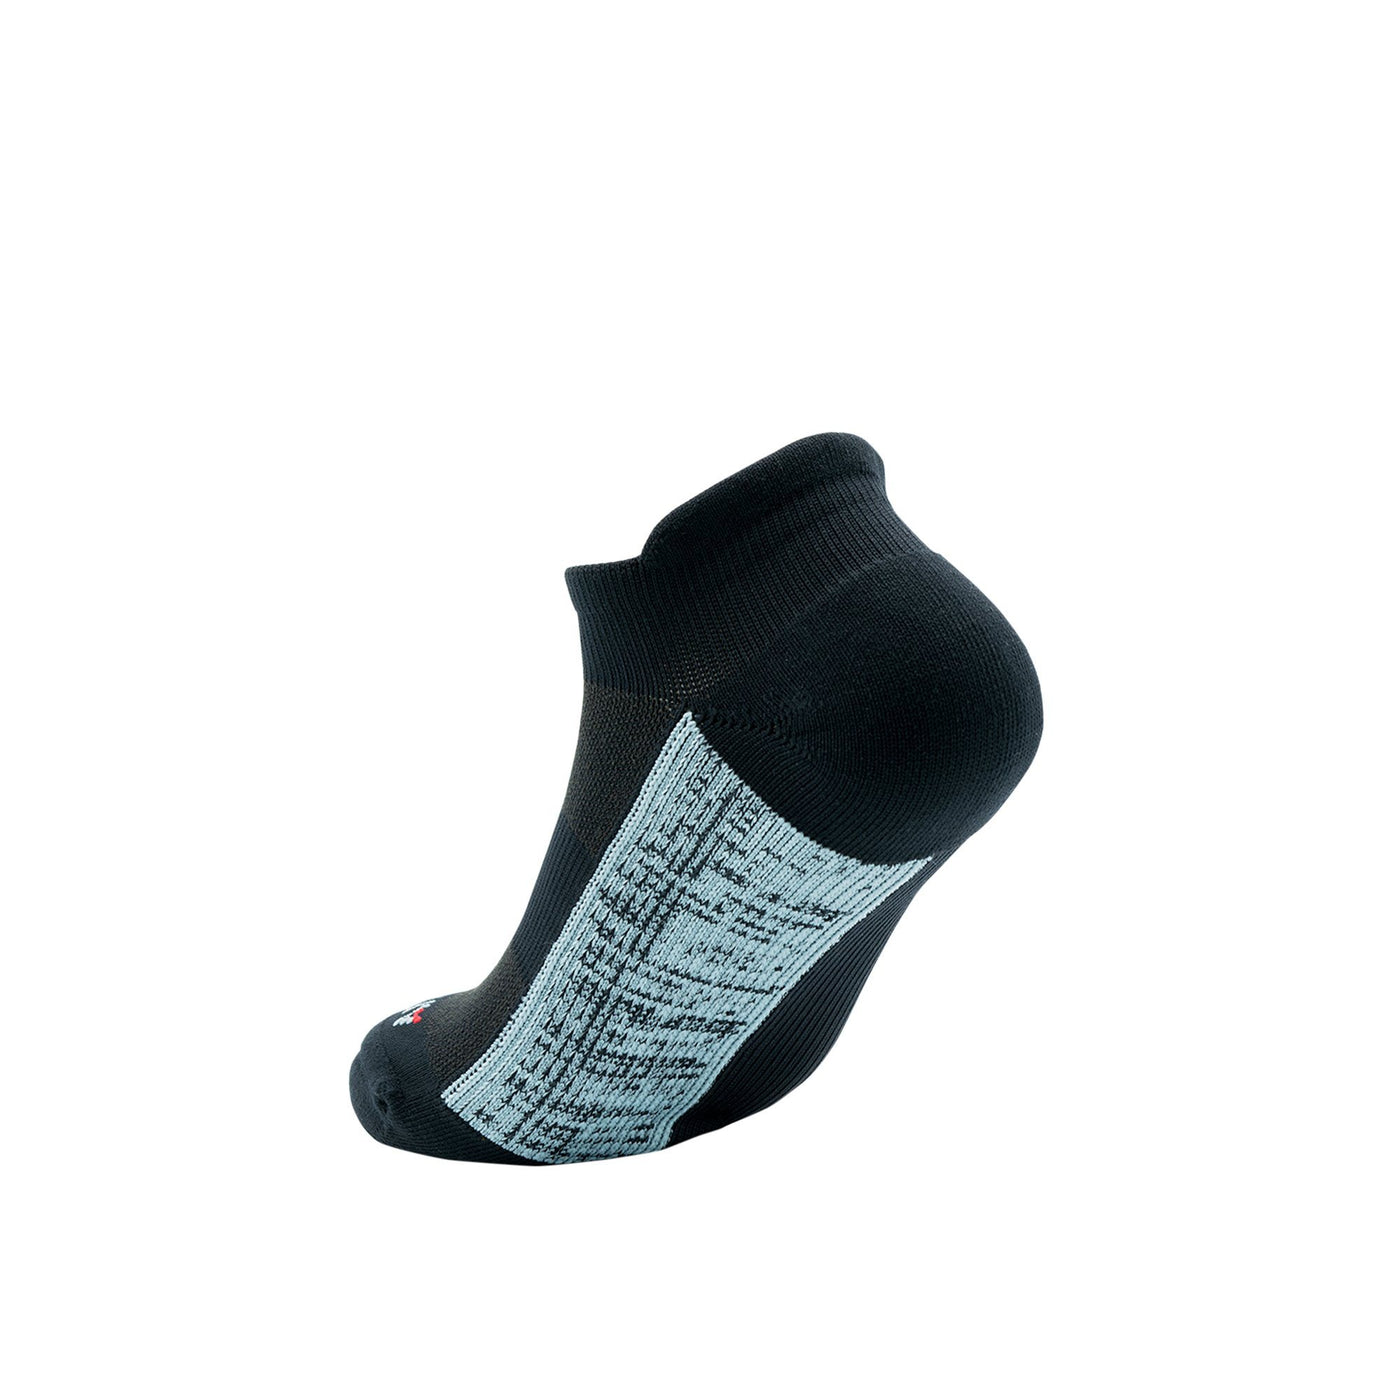 Athletic Ankle Sock 6-Pack in Black athletic socks ArchTek